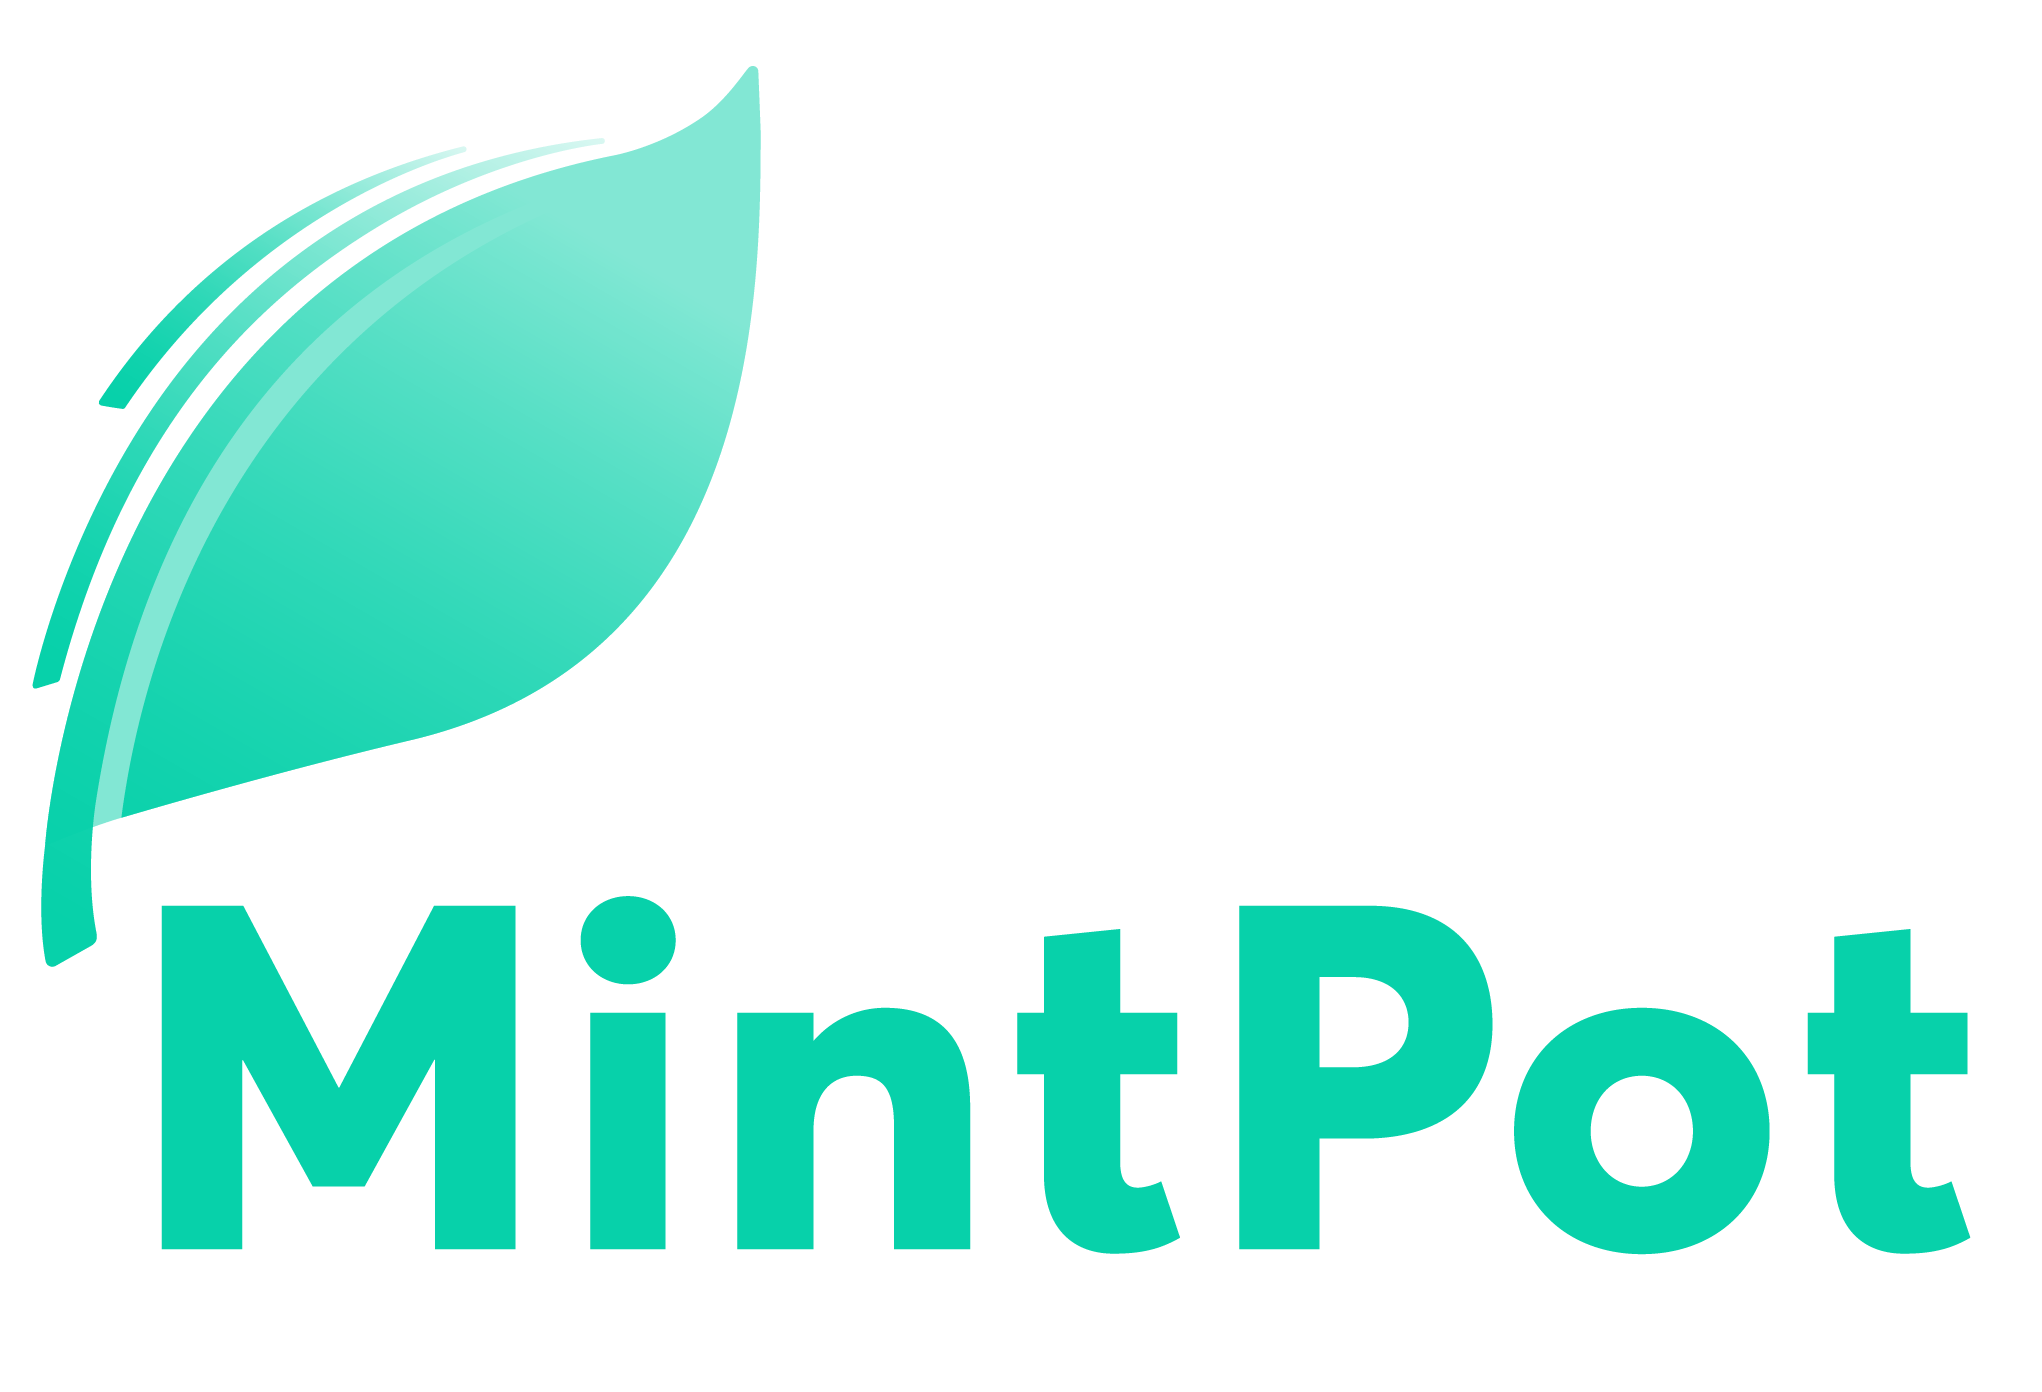 MintPot logo image